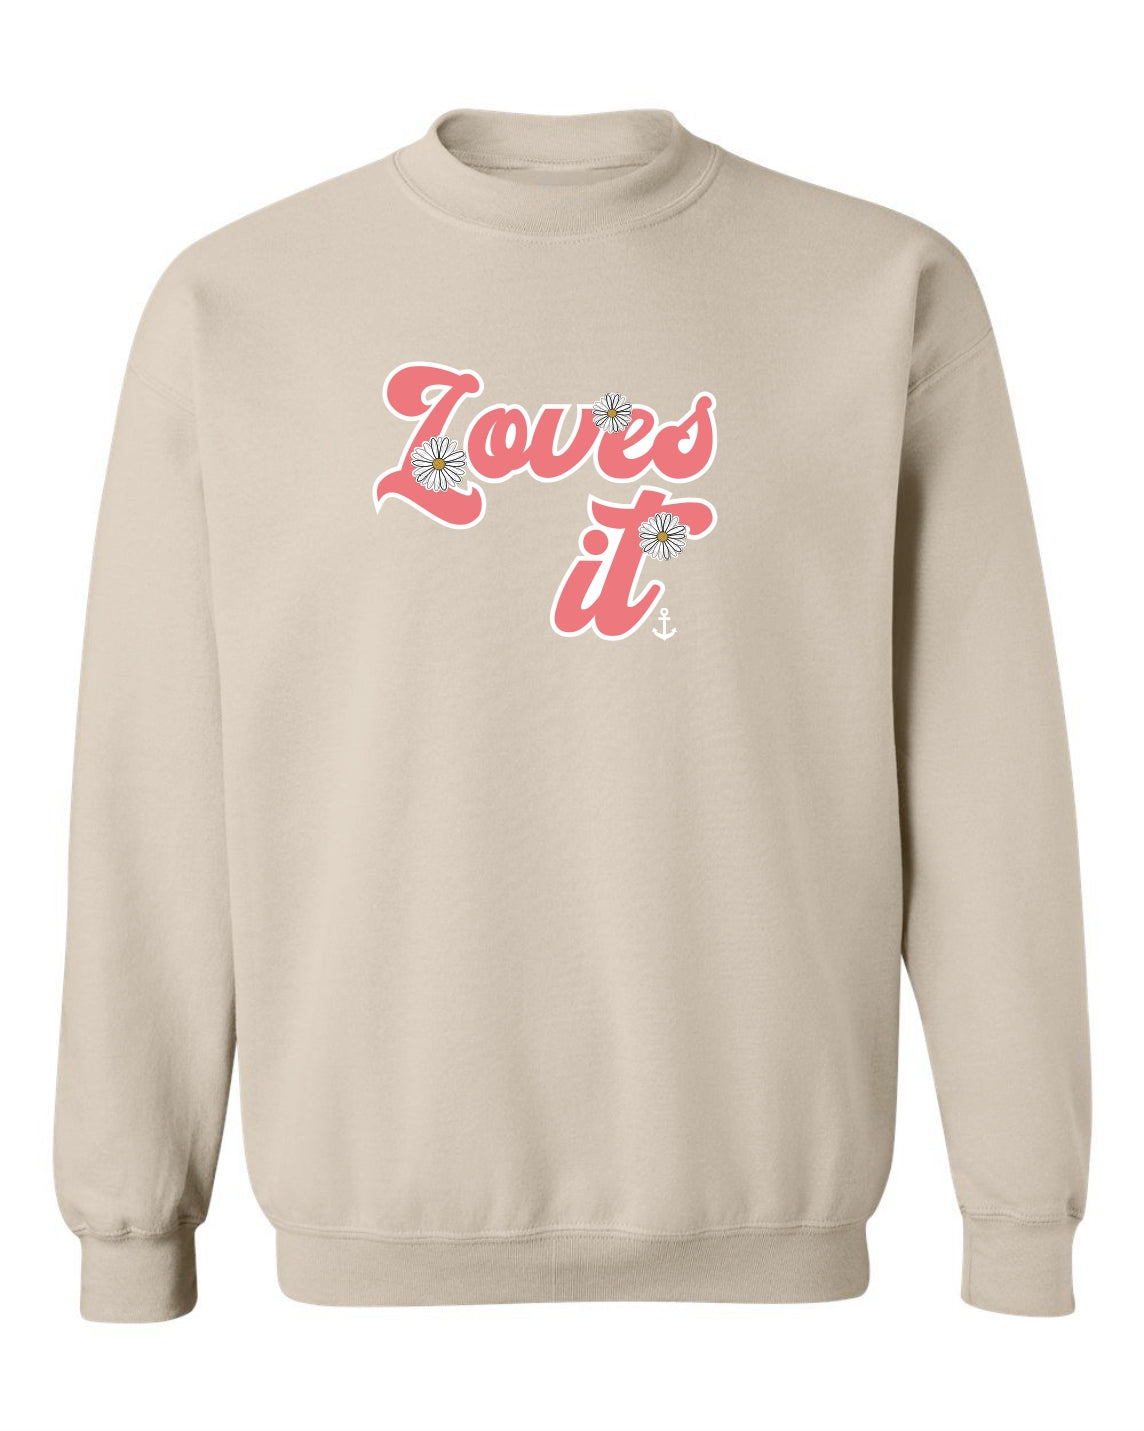 "Loves It" Daisies Unisex Crewneck Sweatshirt